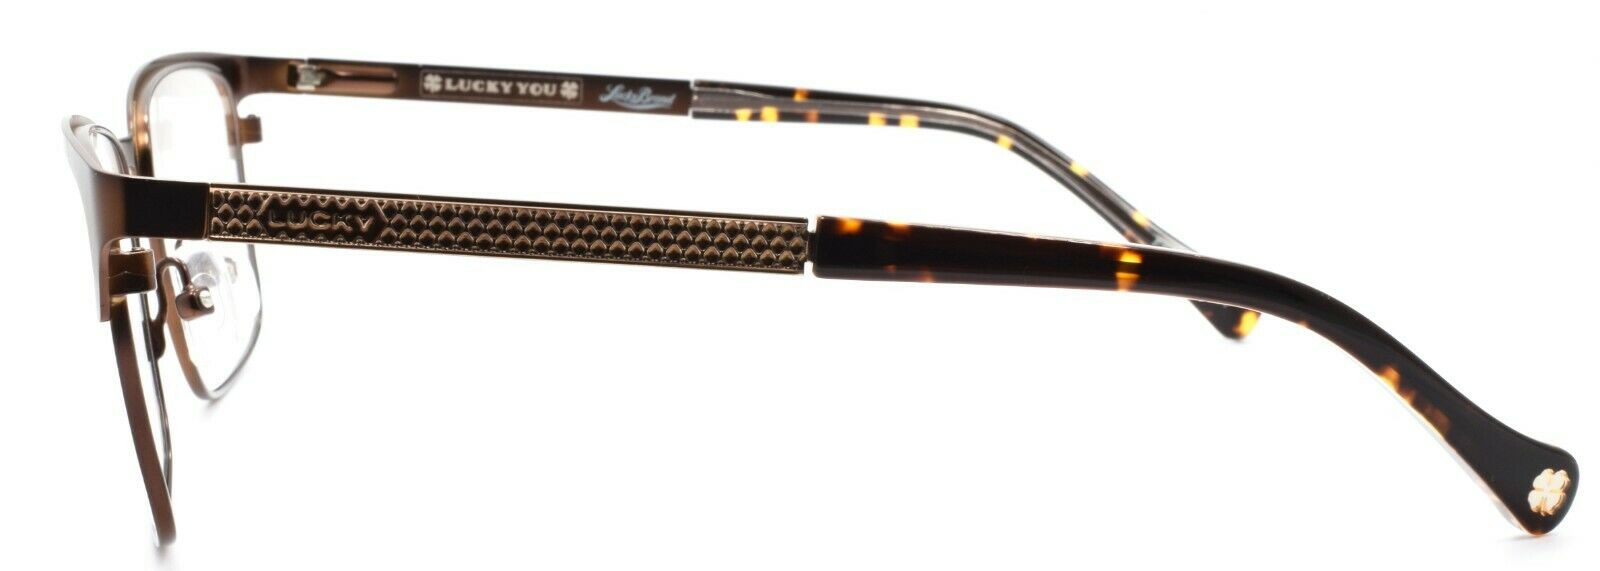 3-LUCKY BRAND D501 Men's Eyeglasses Frames 53-18-135 Brown + CASE-751286277425-IKSpecs